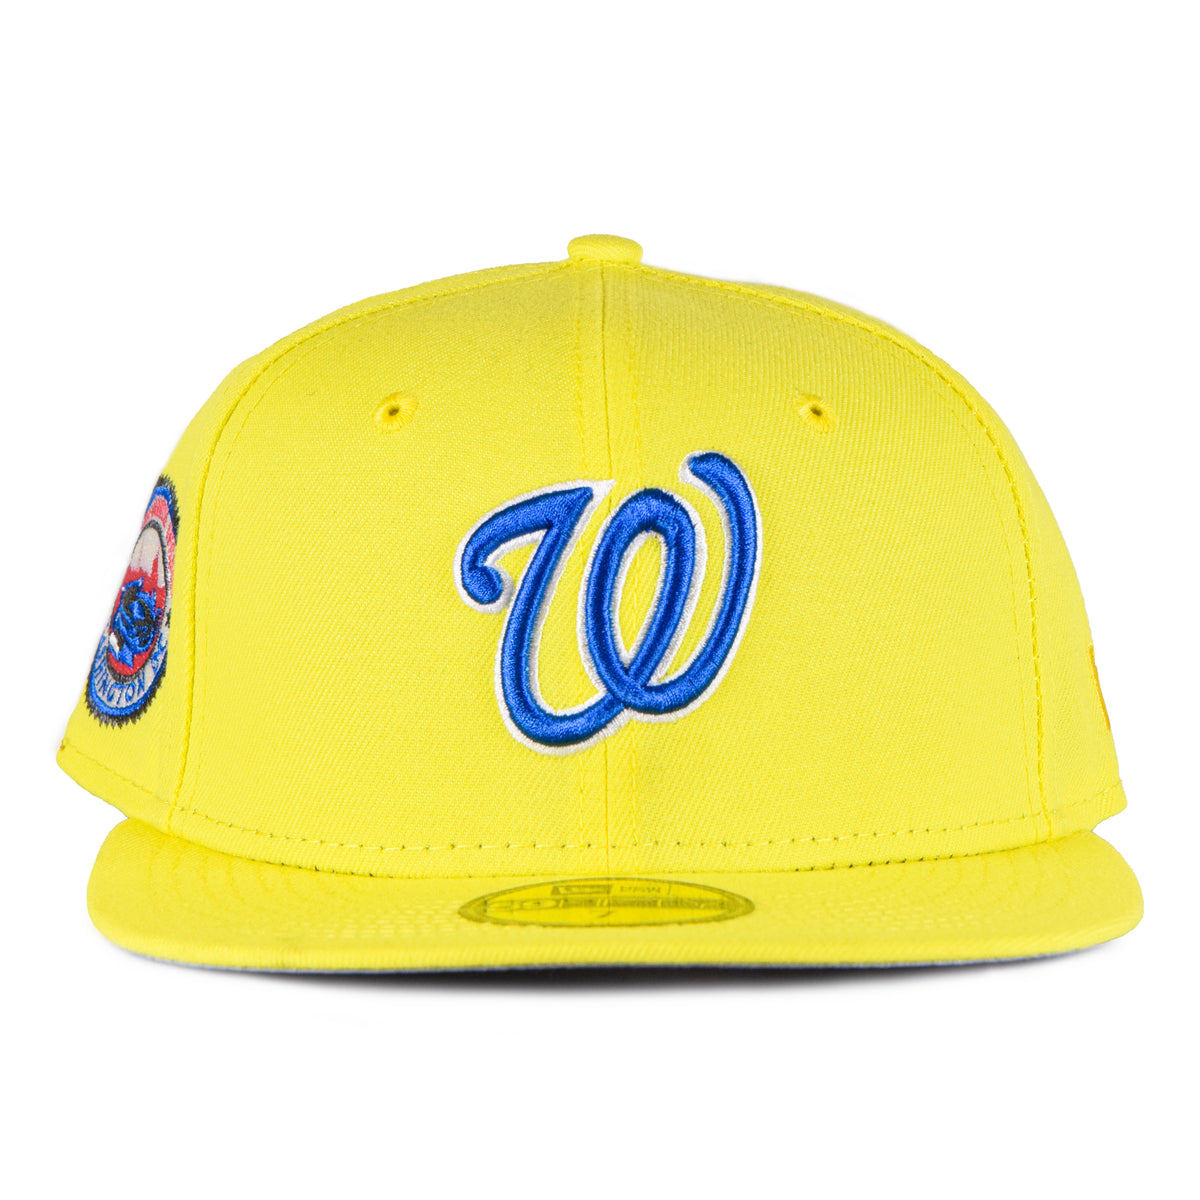 Washington Nationals Caps